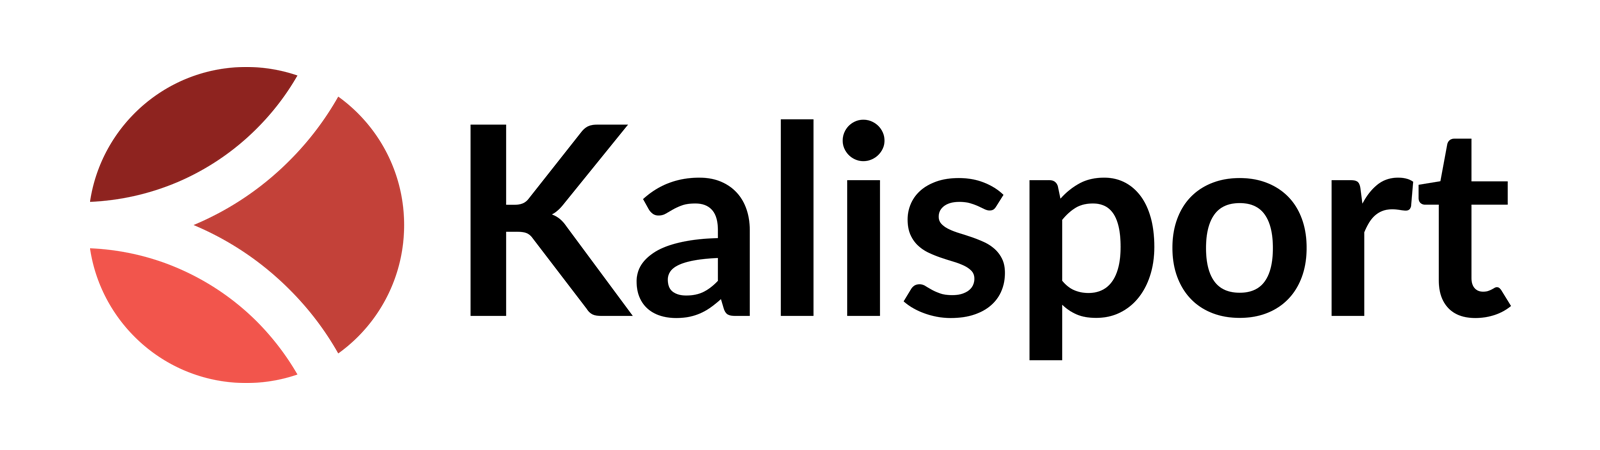 Logo principal couleur